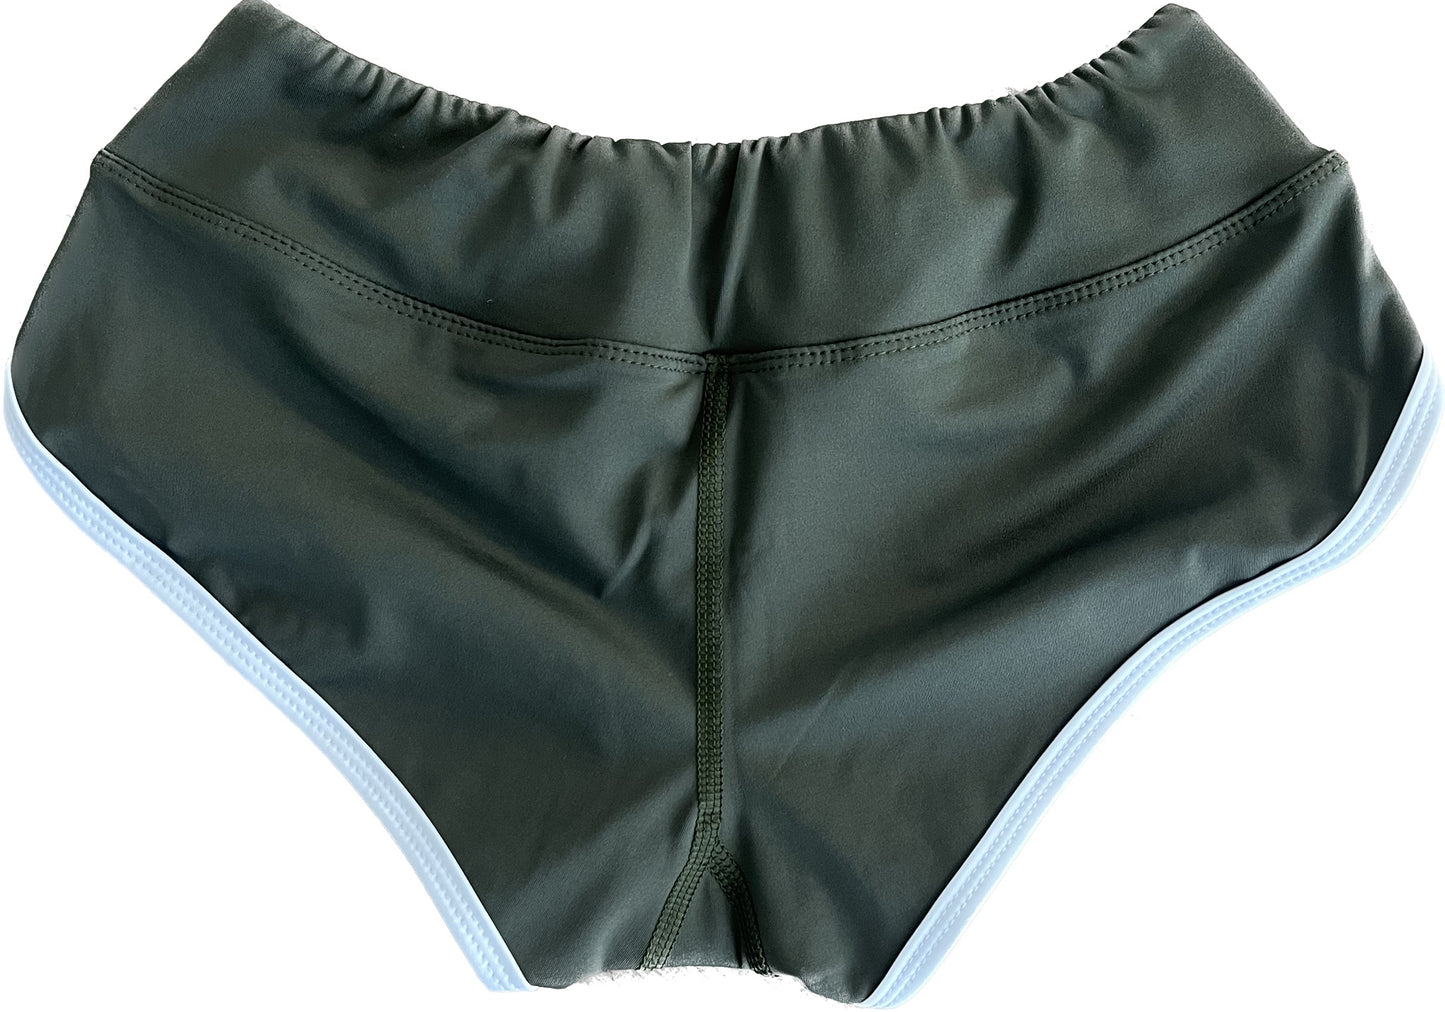 Piranha Fitness Shorts